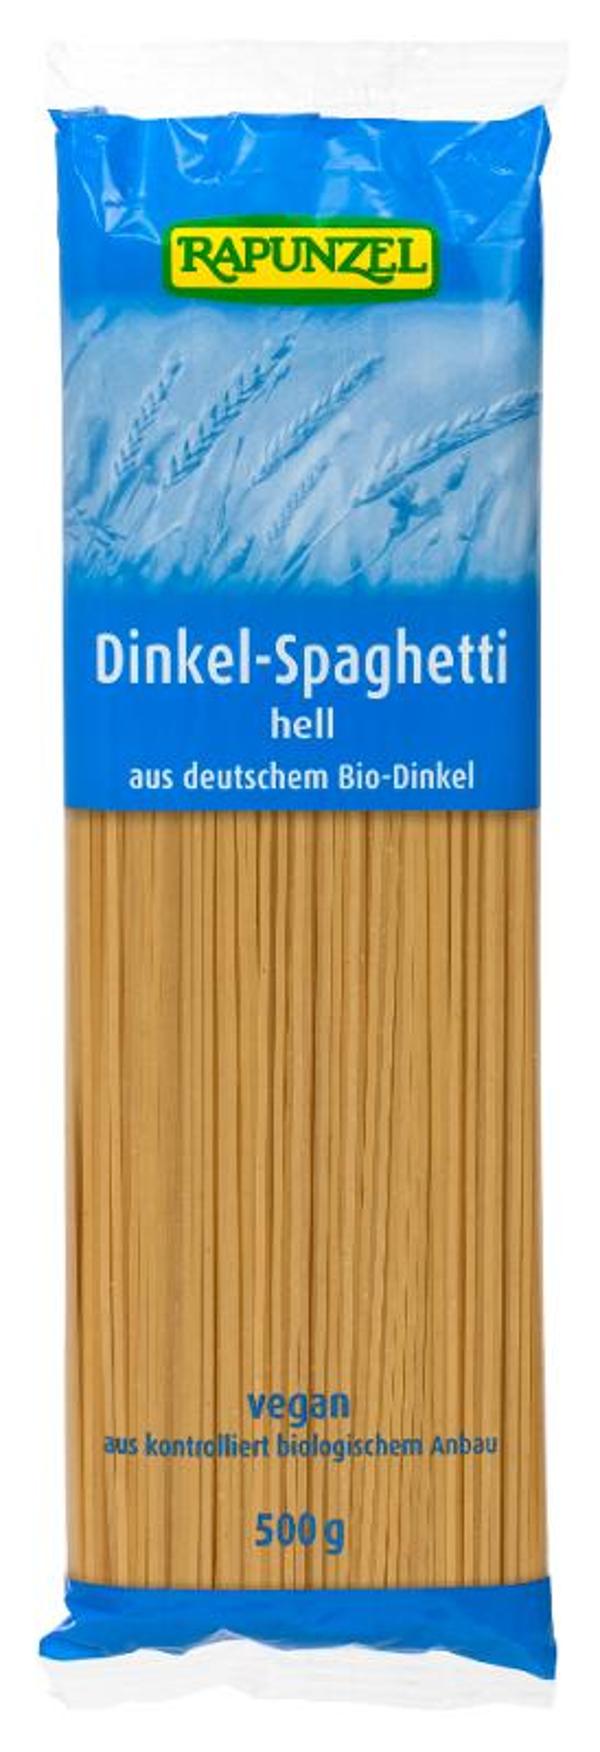 Produktfoto zu Rapunzel Dinkel-Spaghetti hell - 500g